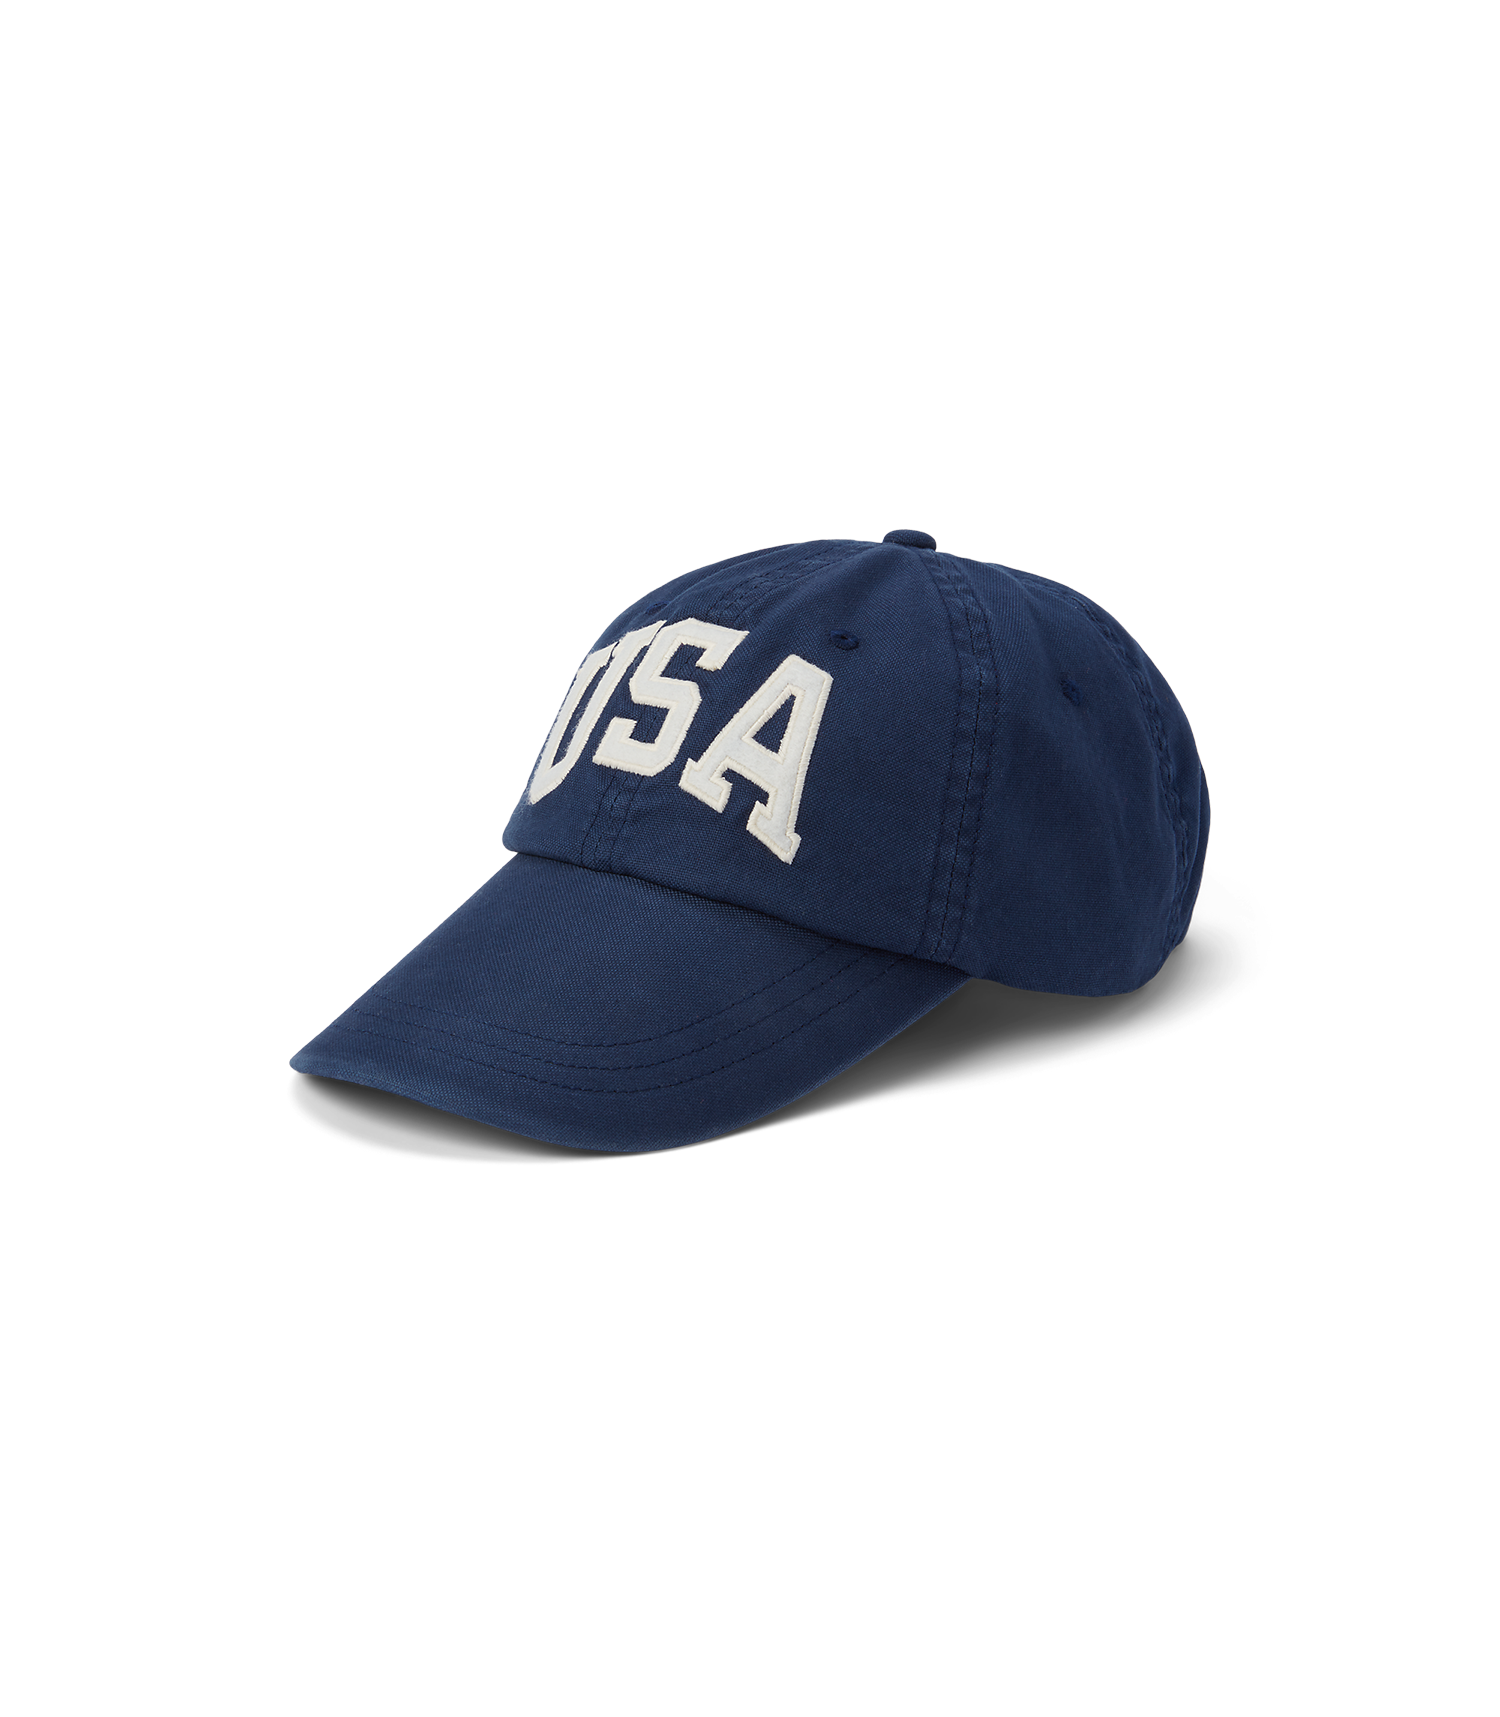 USA Longbill Cap - Navy